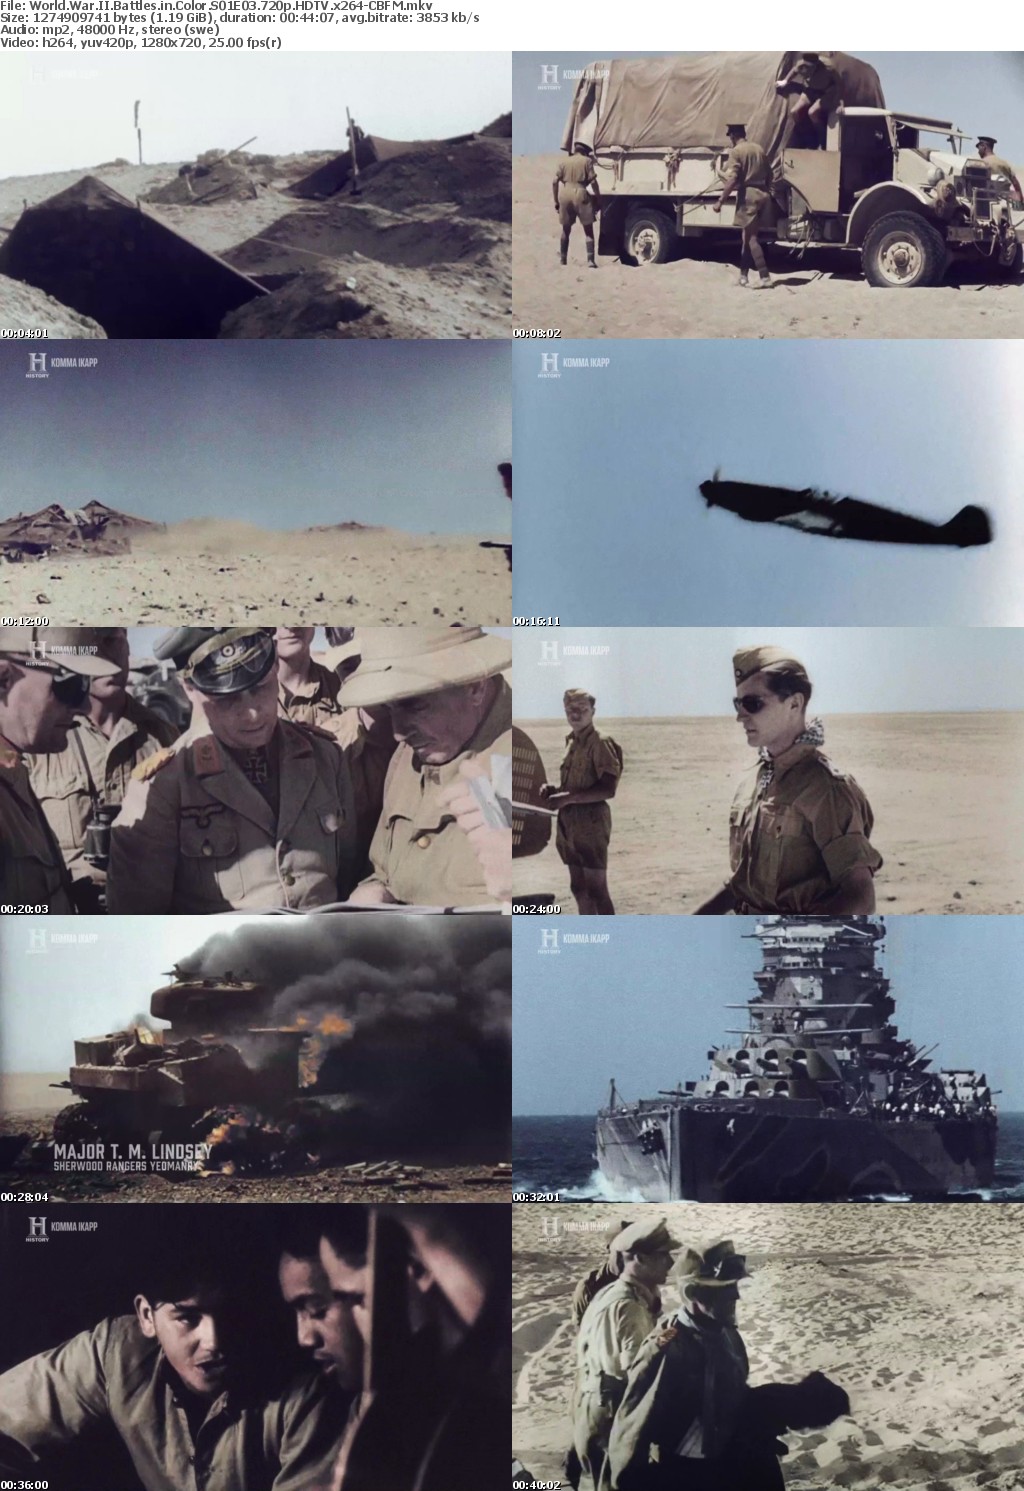 World War II Battles in Color S01E03 720p HDTV x264-CBFM